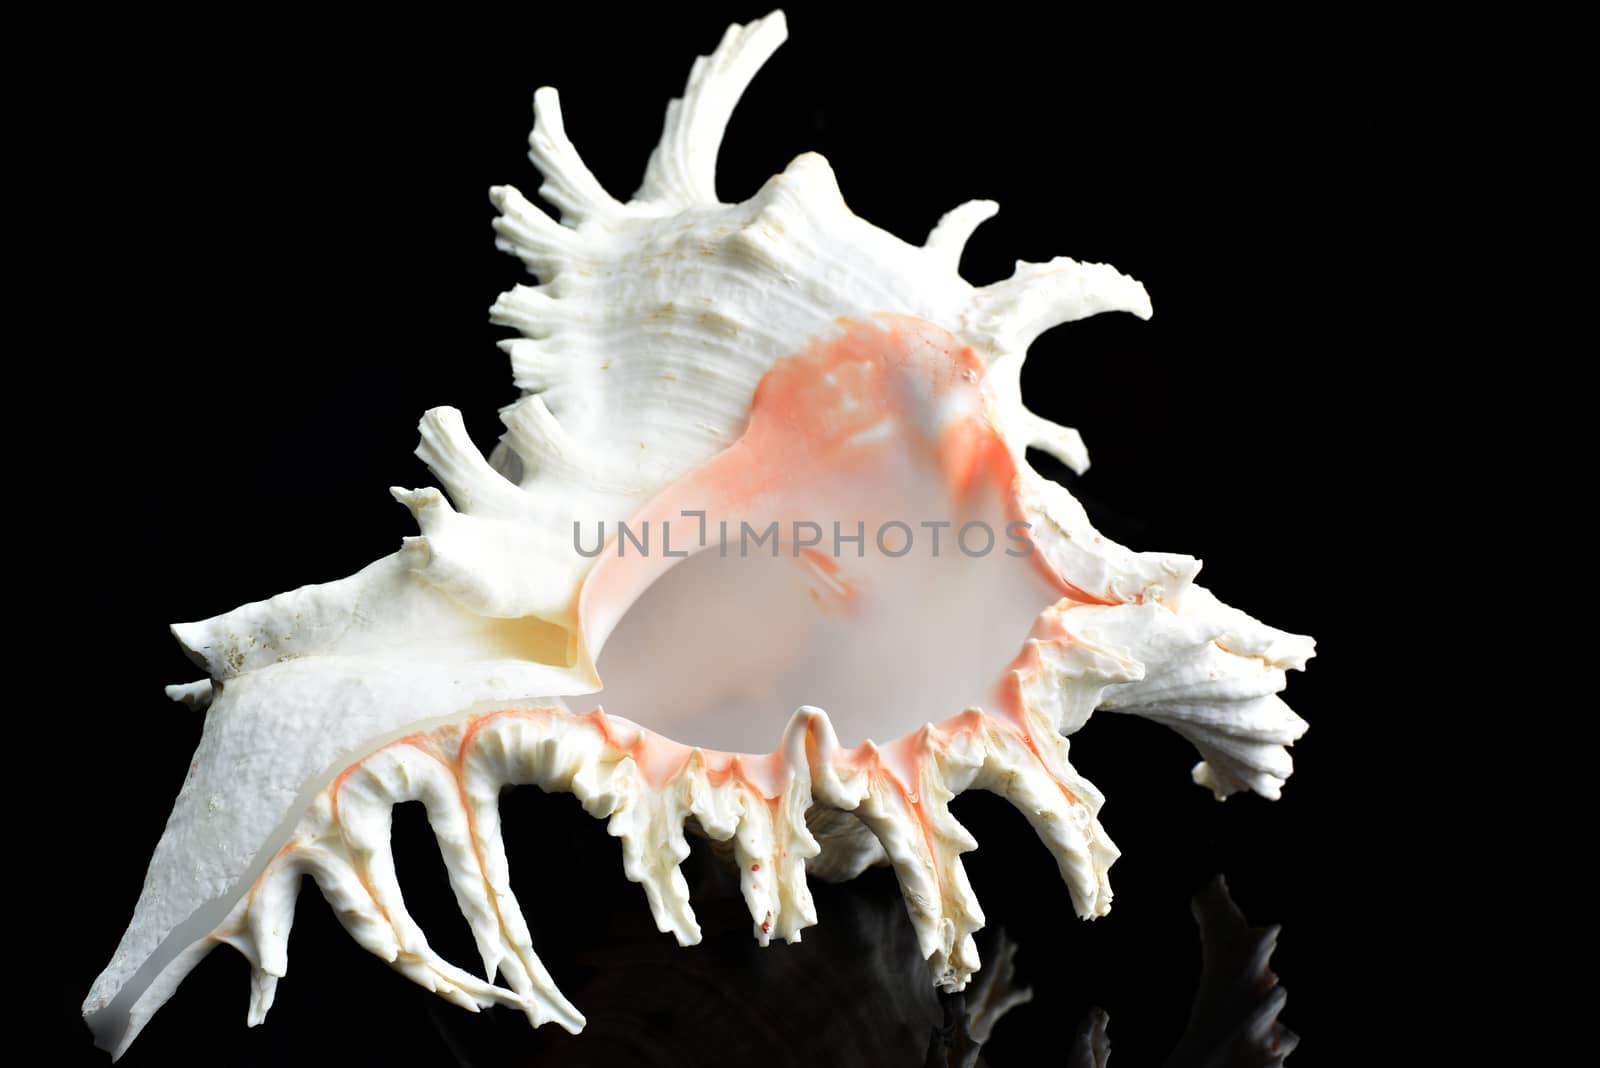 Beautiful seashell Chicoreus ramosus, common name the ramose murex or branched murex